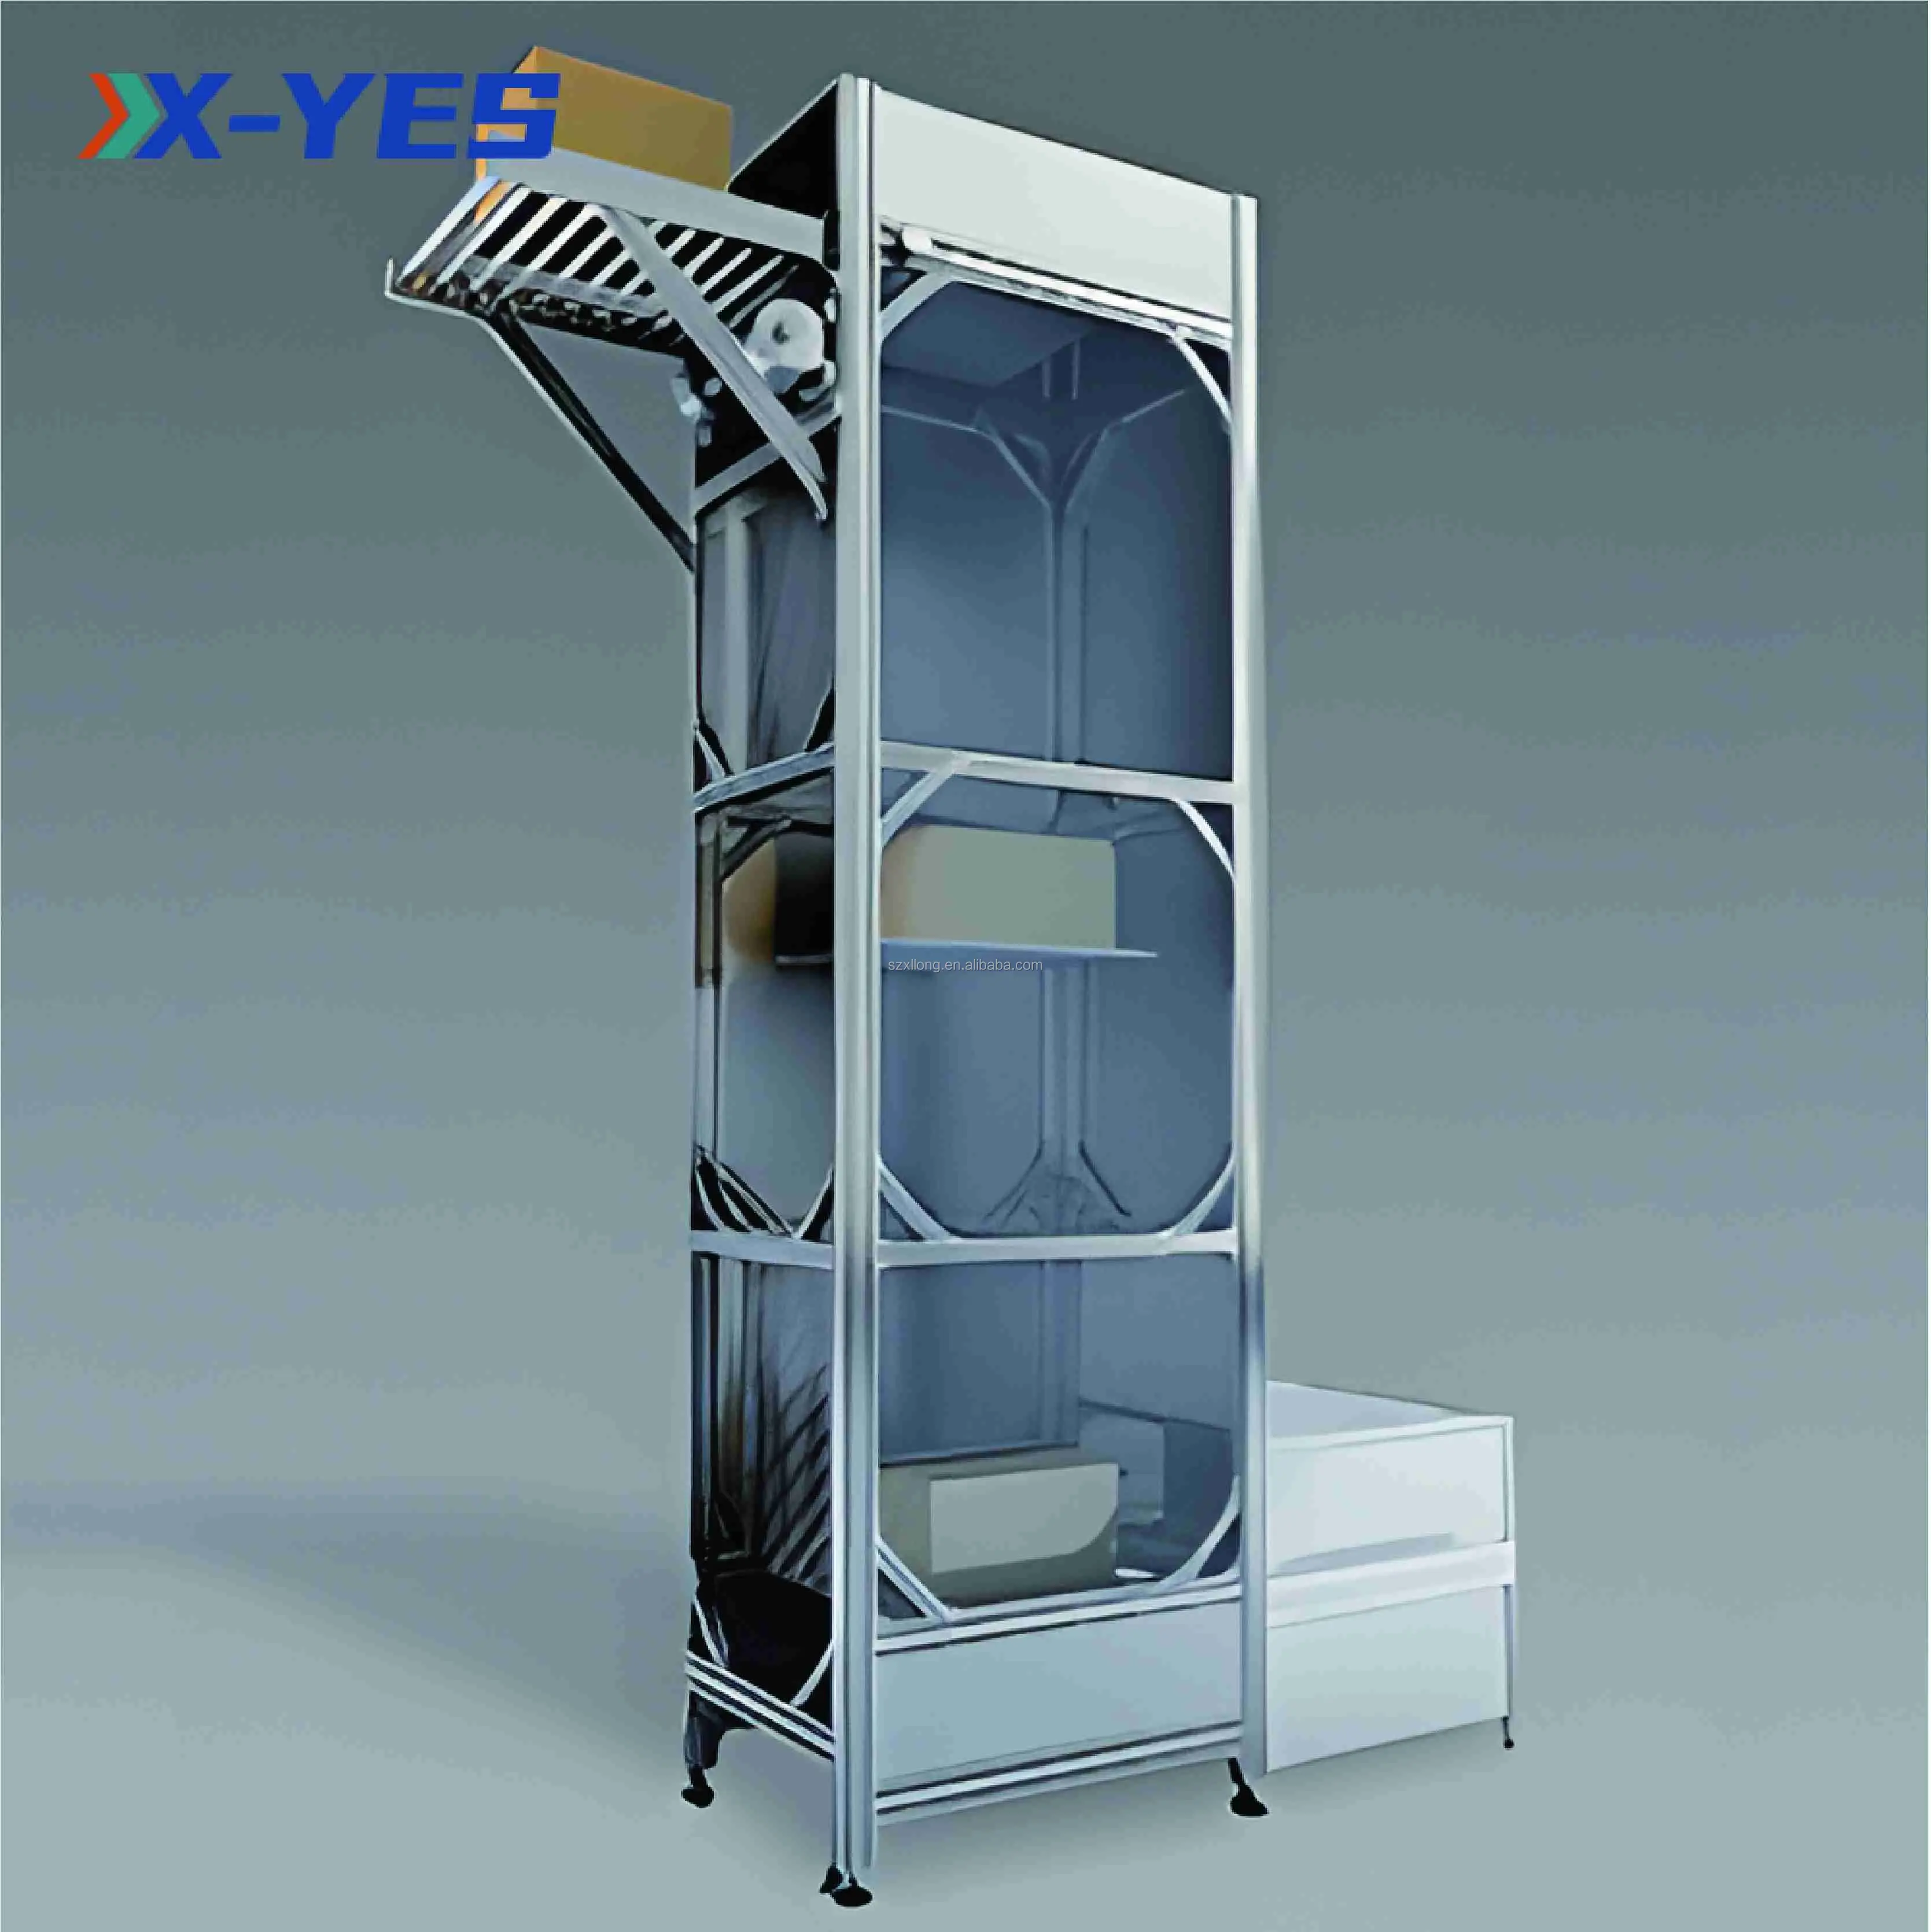 X-YES コスト構造の最適化、利益の増加 連続垂直コンベア 垂直リフトコンベア